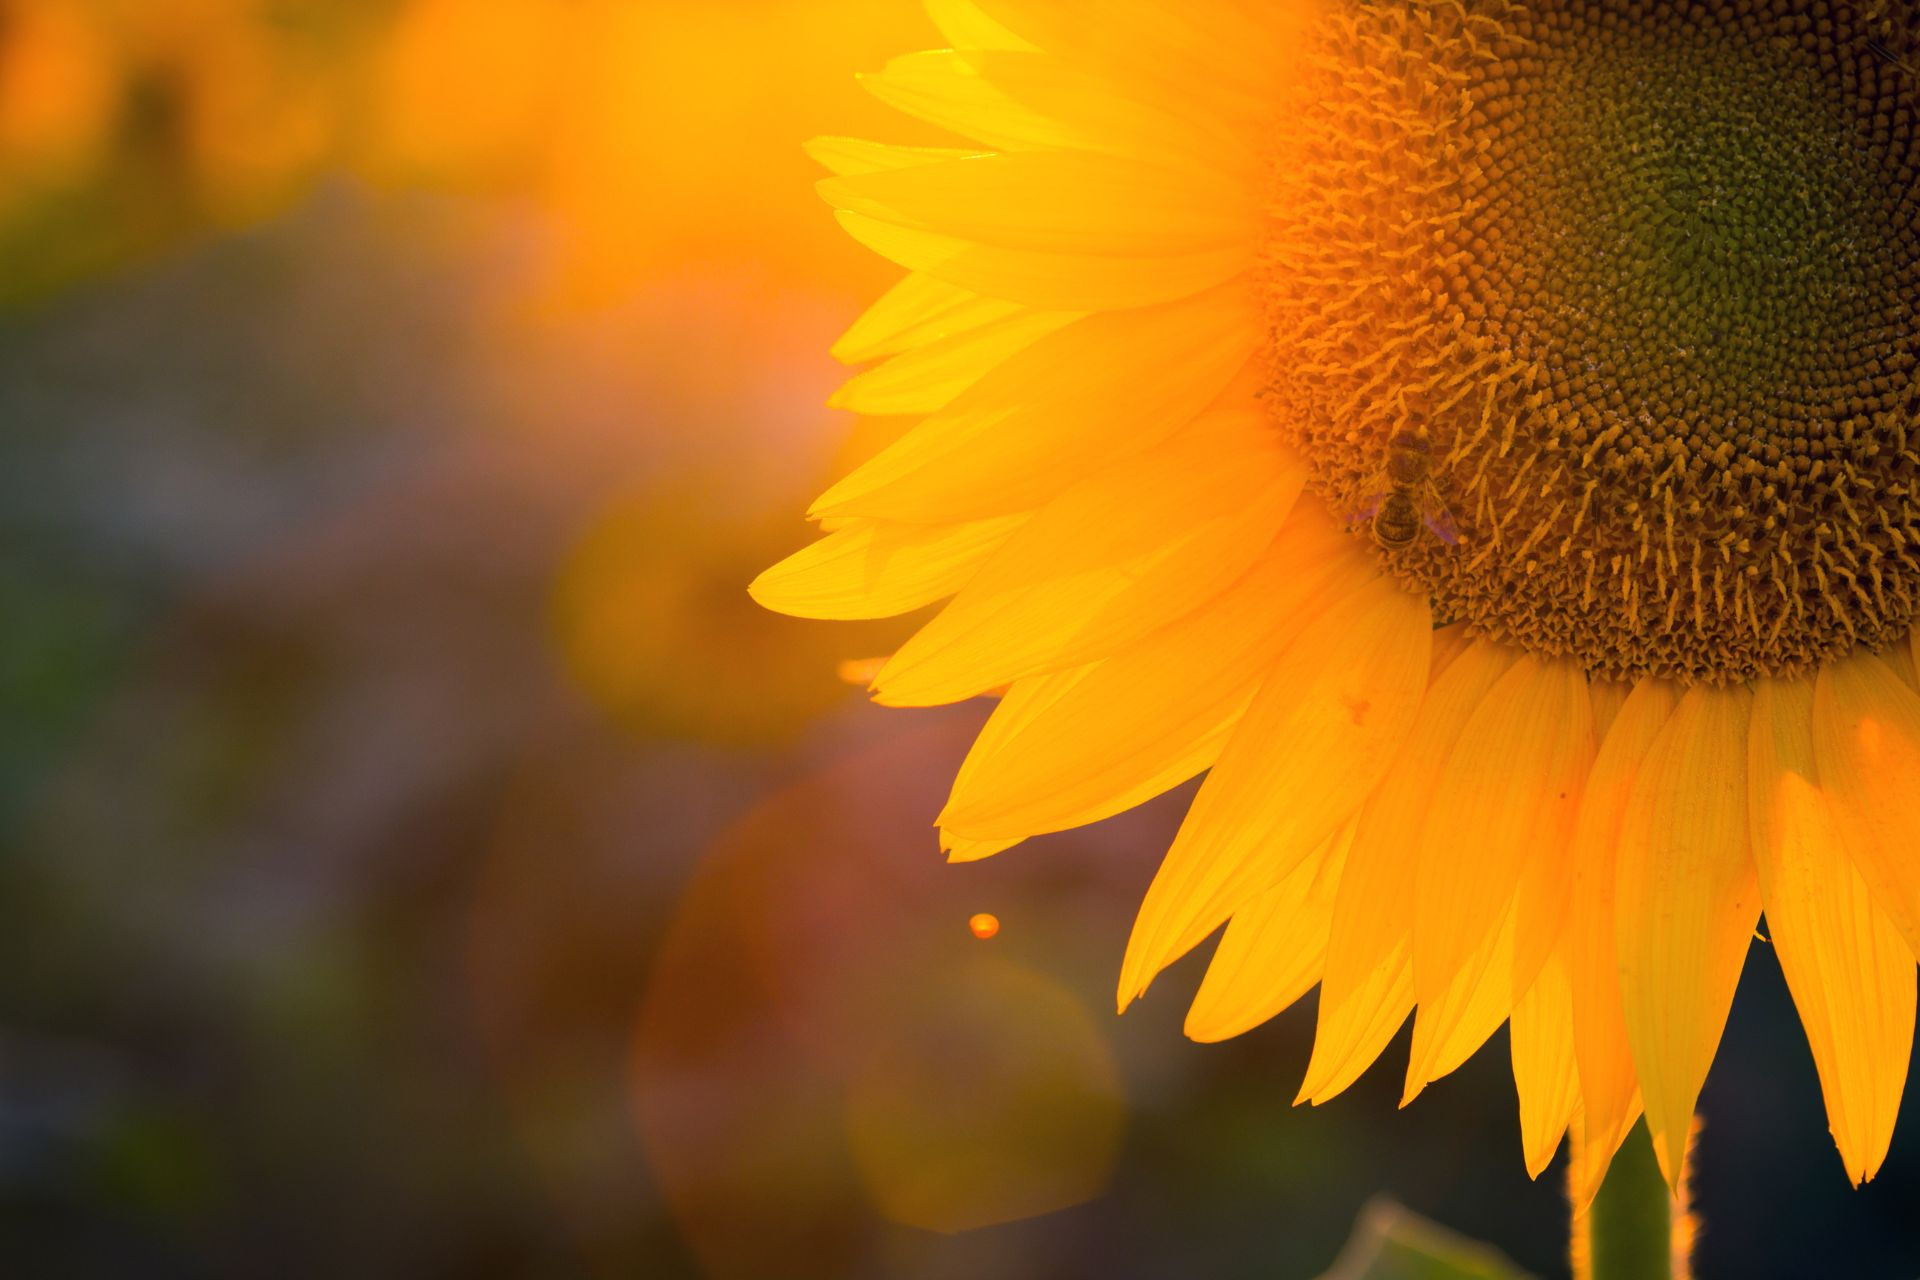 Sunflower 2 imagen web (1920 × 1280 px)